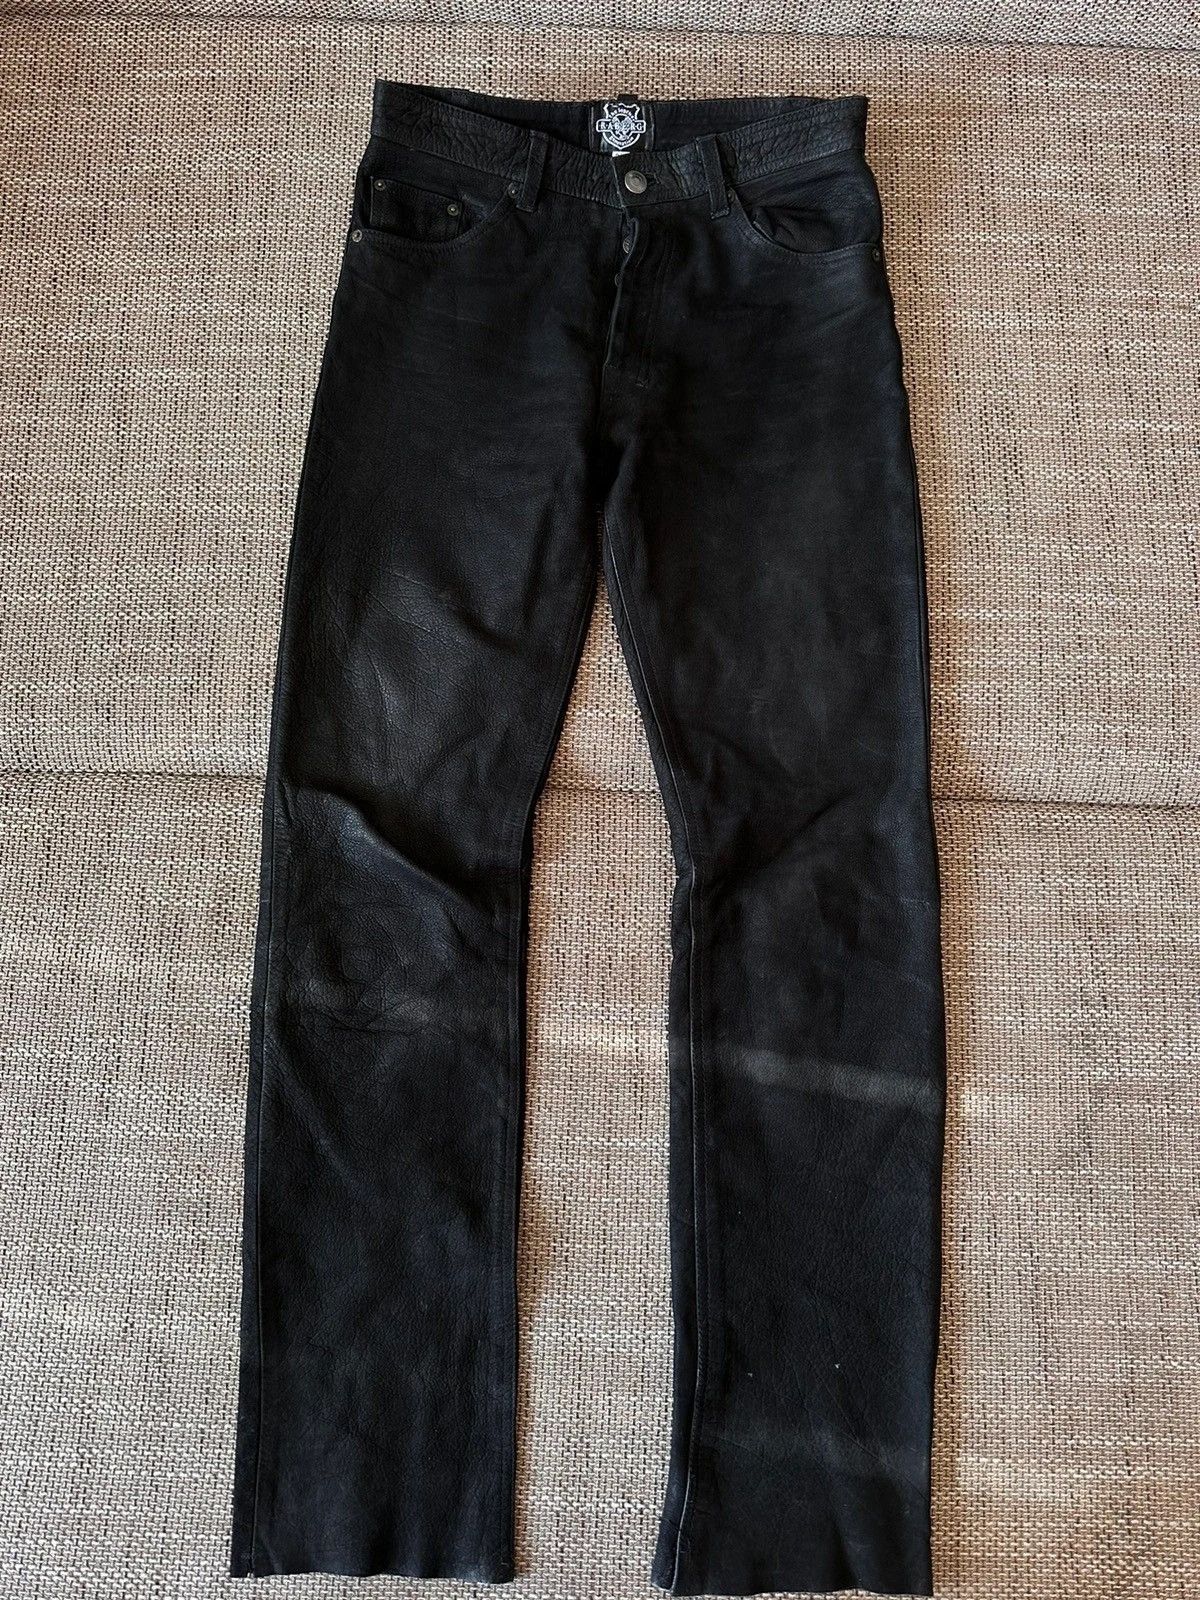 Vintage Vintage Genuine Leather RABERG Generation Leather Pants | Grailed